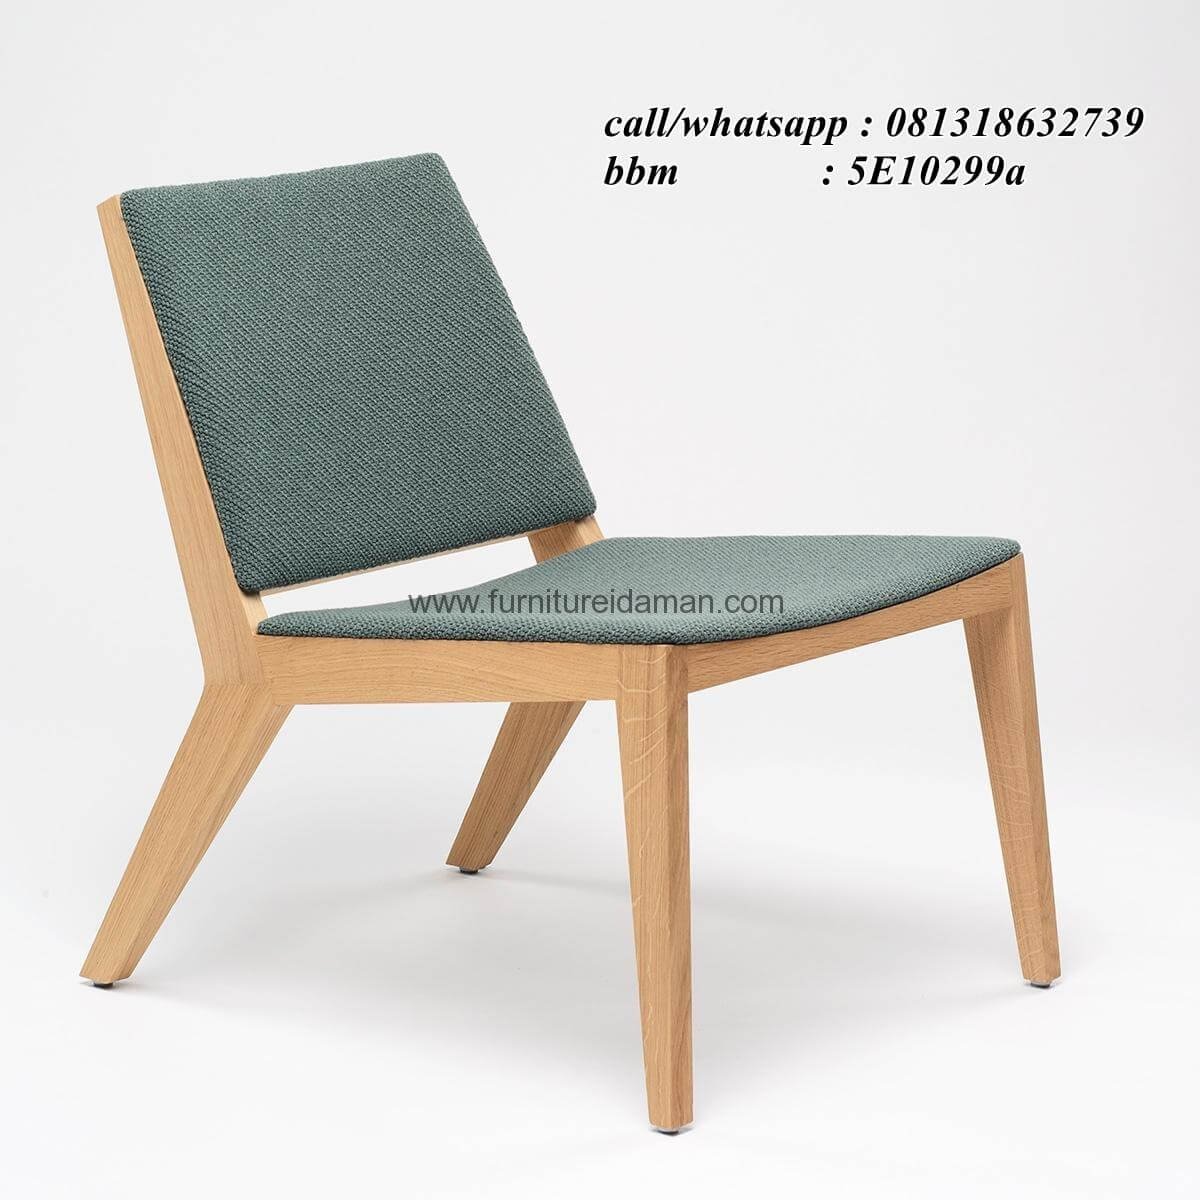 Kursi Cafe Spain Kayu Jati Sollid Terbaru KCI 70 Furniture Idaman